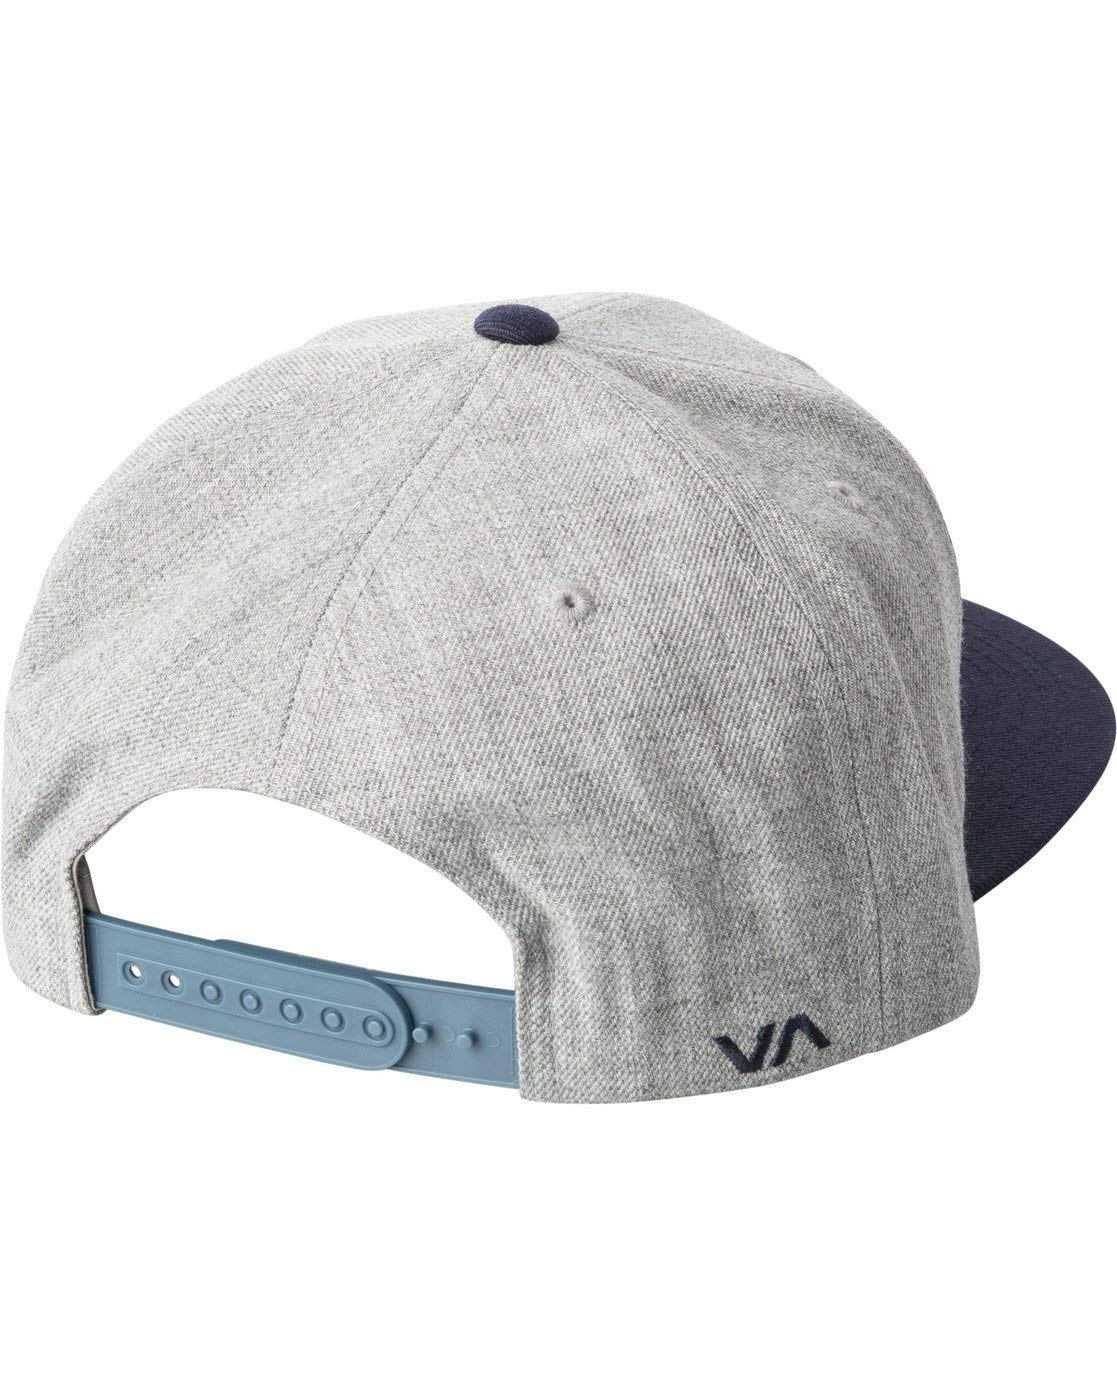 RVCA Men's Adjustable Snapback Hat, Grey Heather/Na, OS